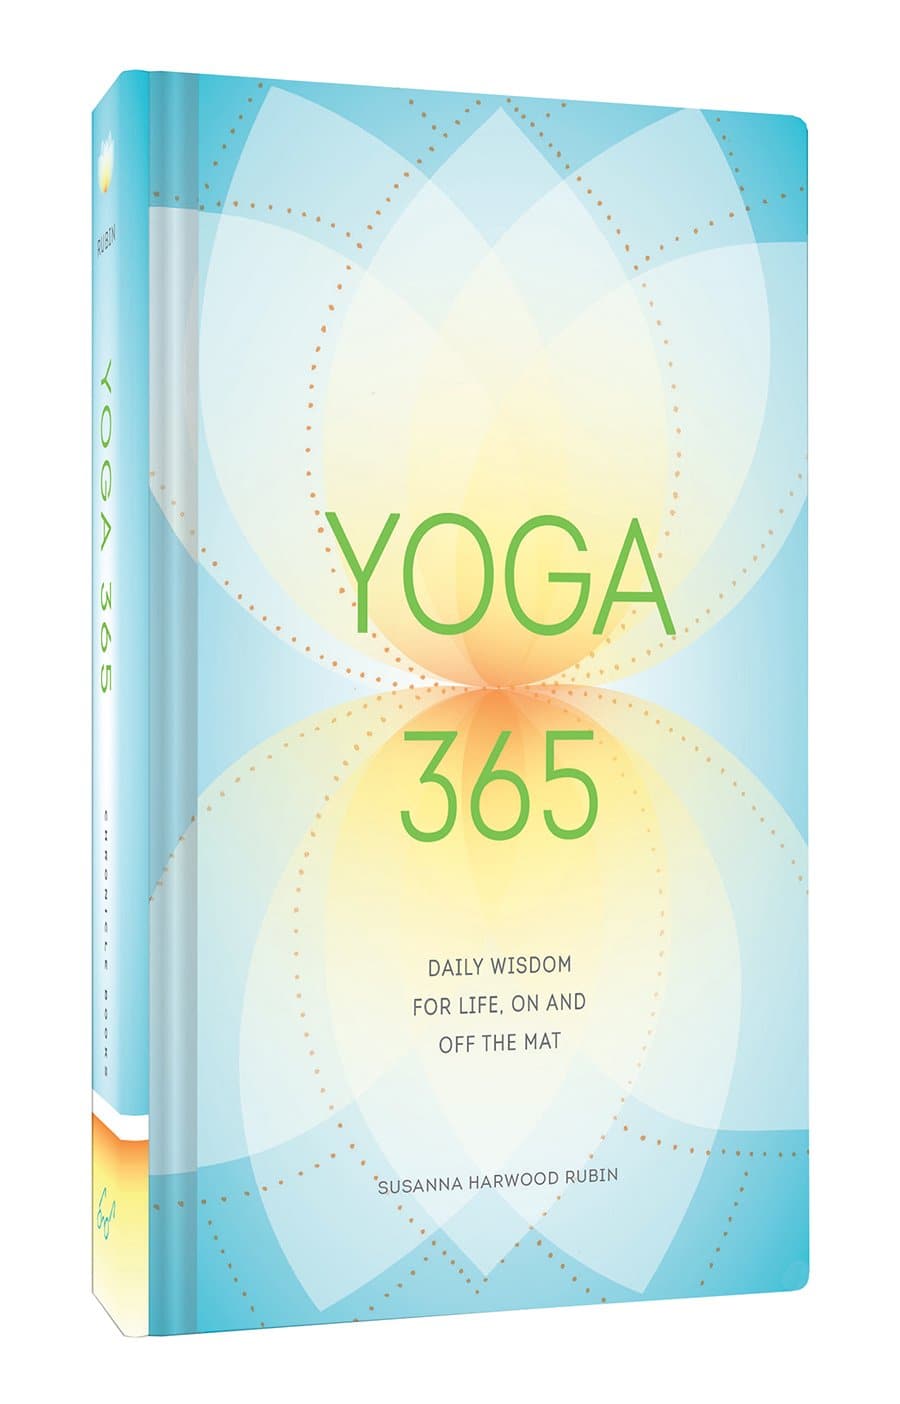 All Life is Secret Yoga (TE 445) 